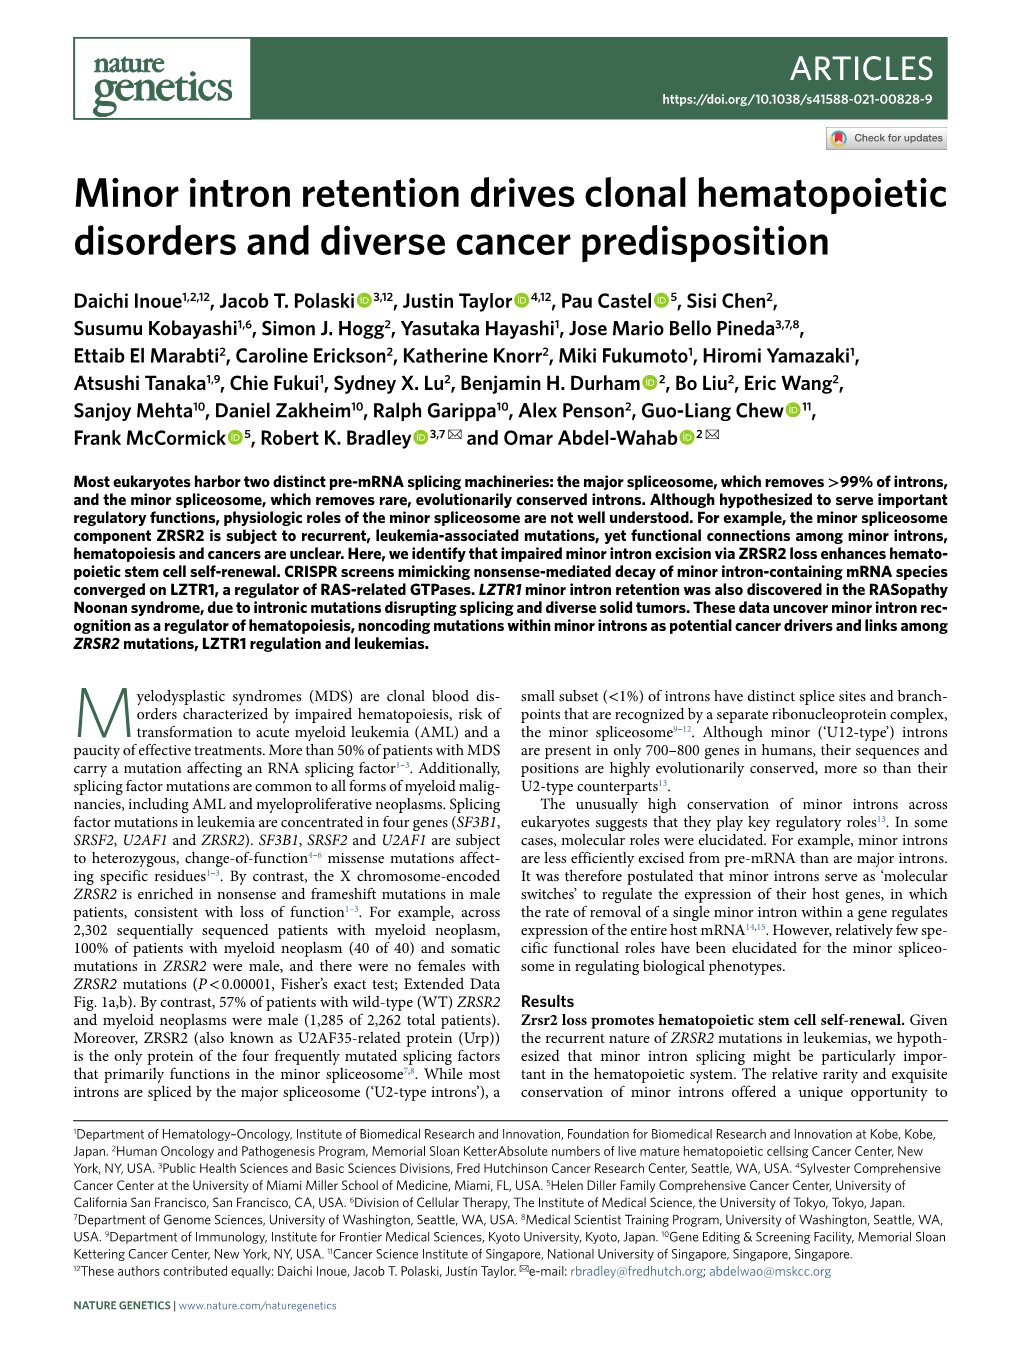 Minor Intron Retention Drives Clonal Hematopoietic Disorders and Diverse Cancer Predisposition